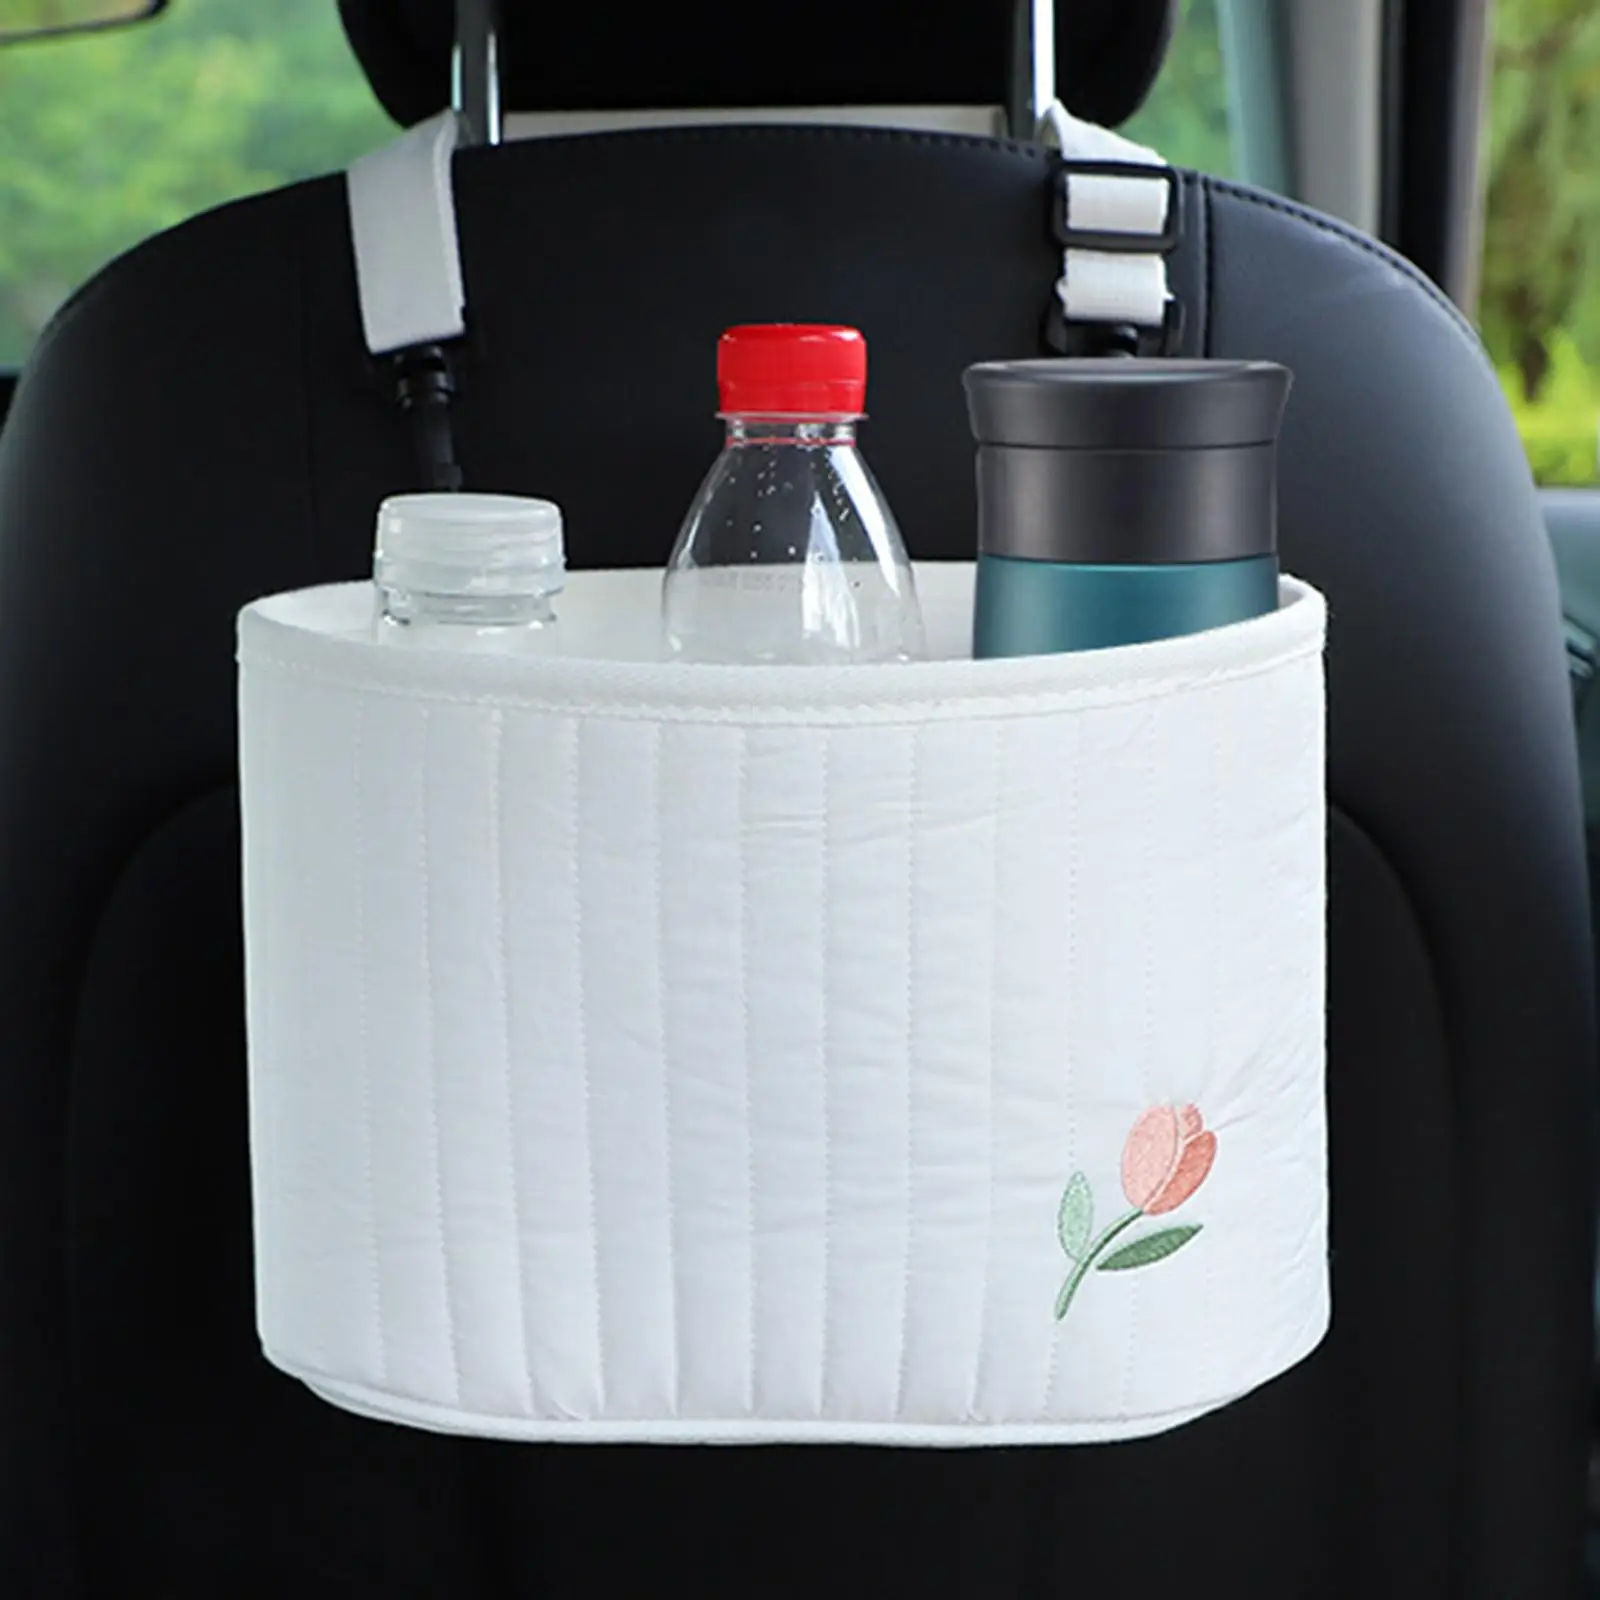 Cotton Linen Car Hanging Bag Backseat Protectors Multi Function Universal